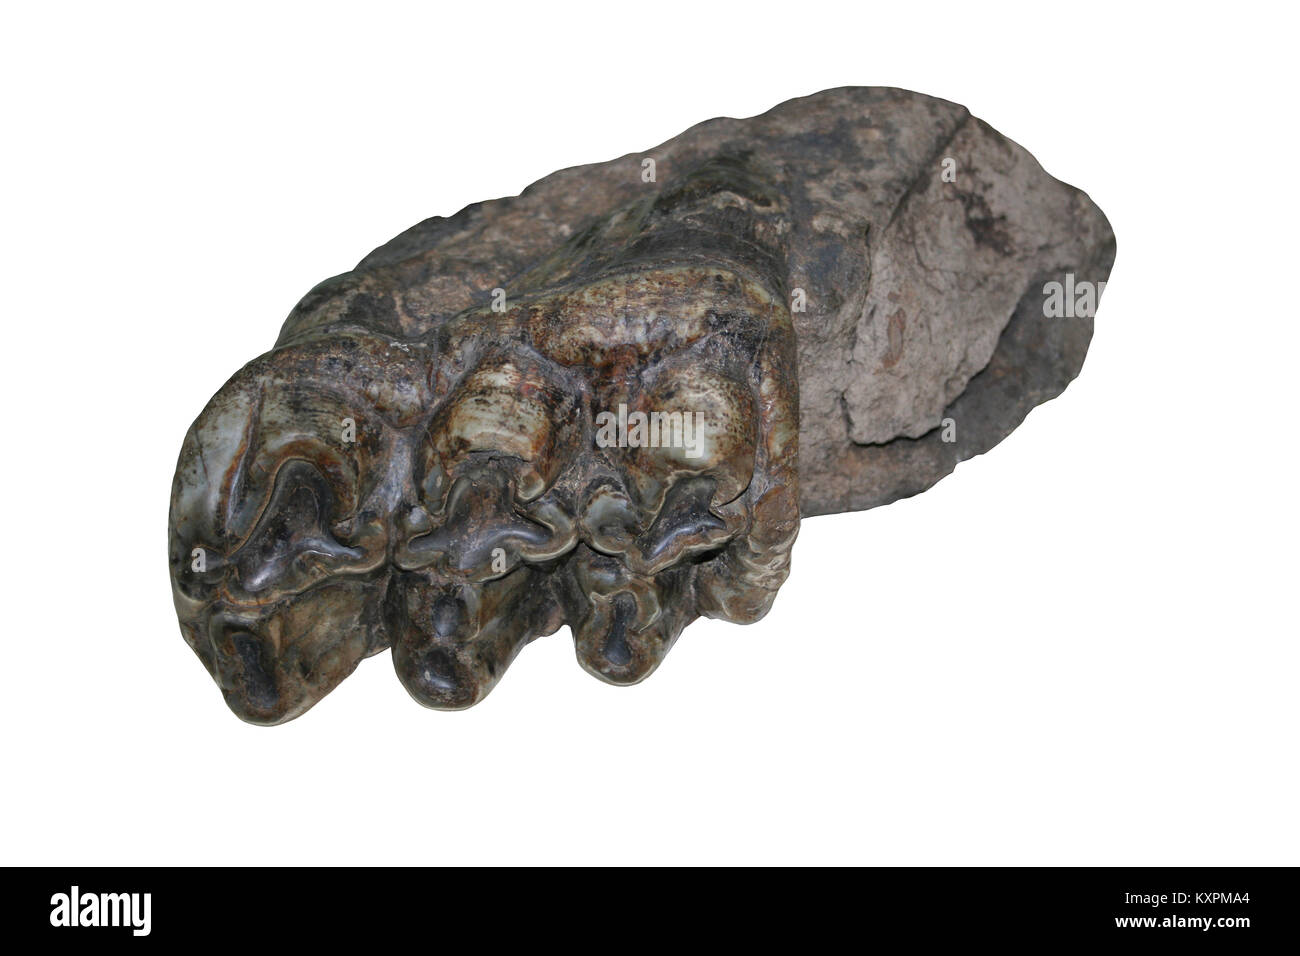 Mandibular And Teeth Of The Extinct Gomphothere Cuvieronius hyodon Relative Of Modern Day Elephants Stock Photo